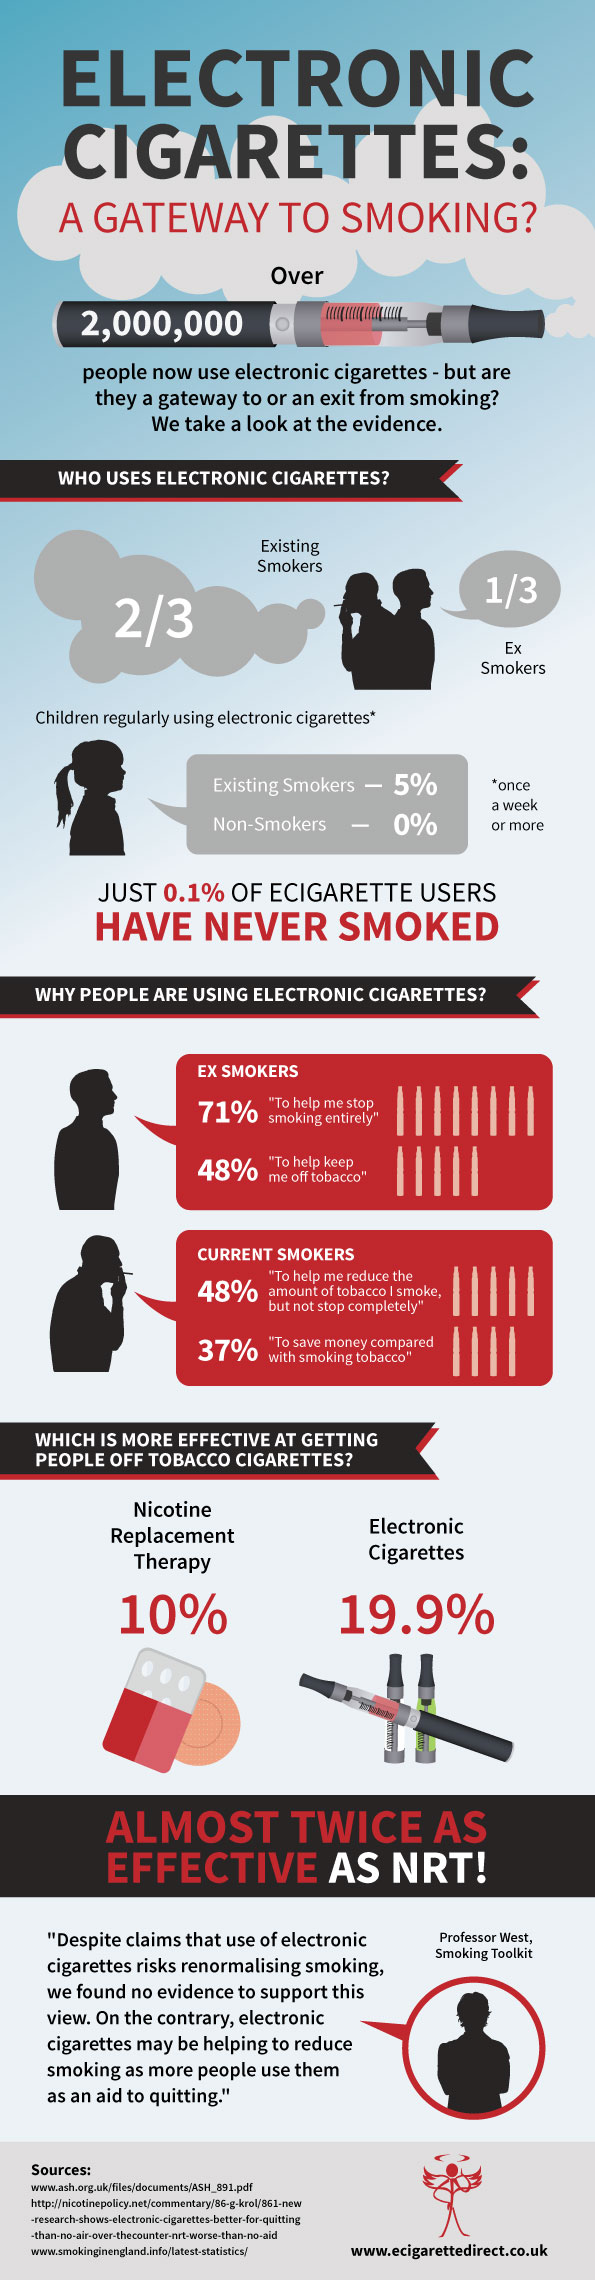 Are E-Cigarettes A Gateway to Smoking